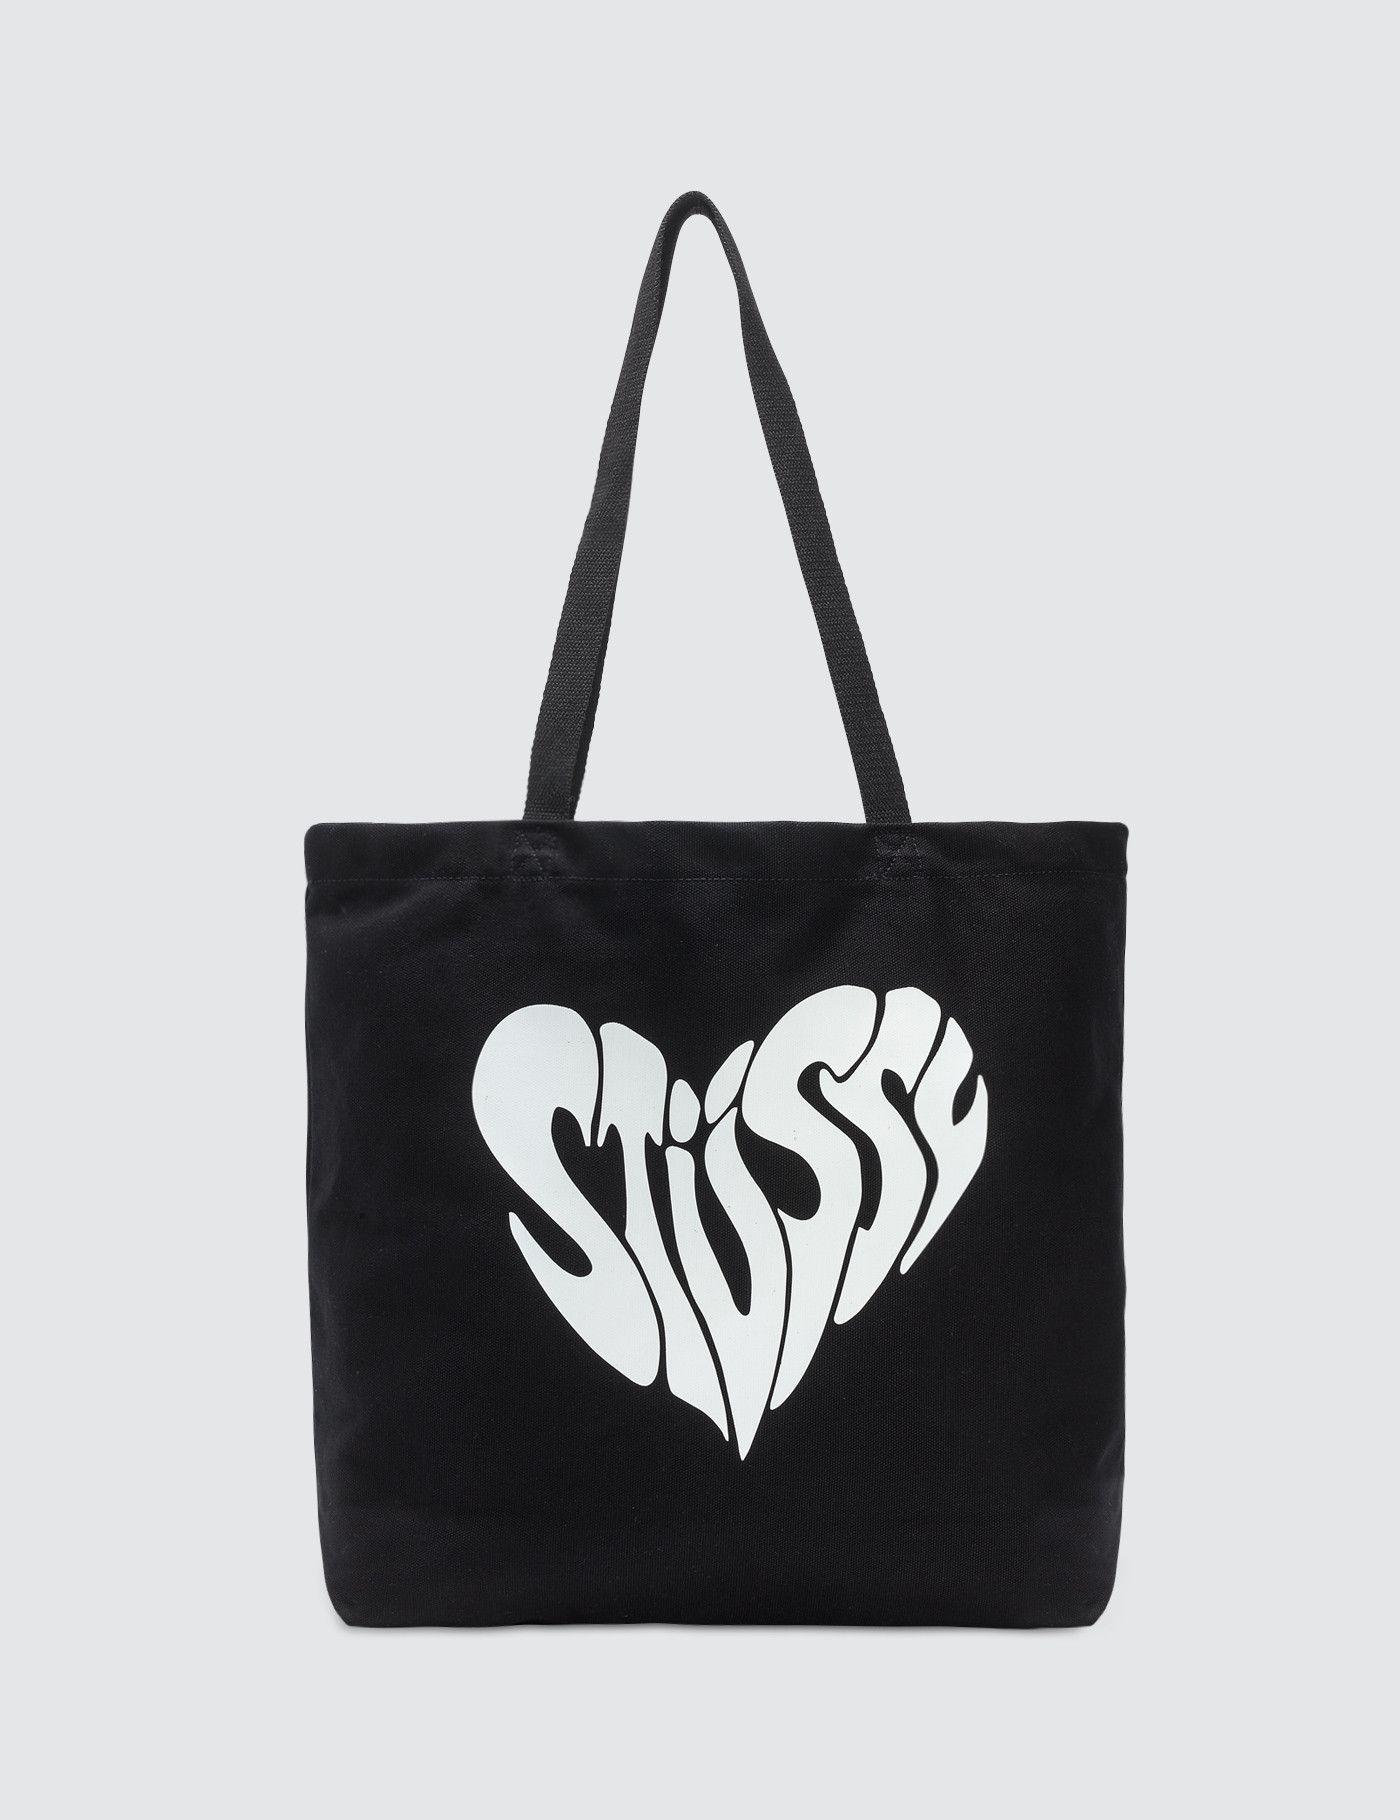 Stussy Original Logo - Buy Original Stussy Peace Tote Bag at Indonesia | BOBOBOBO